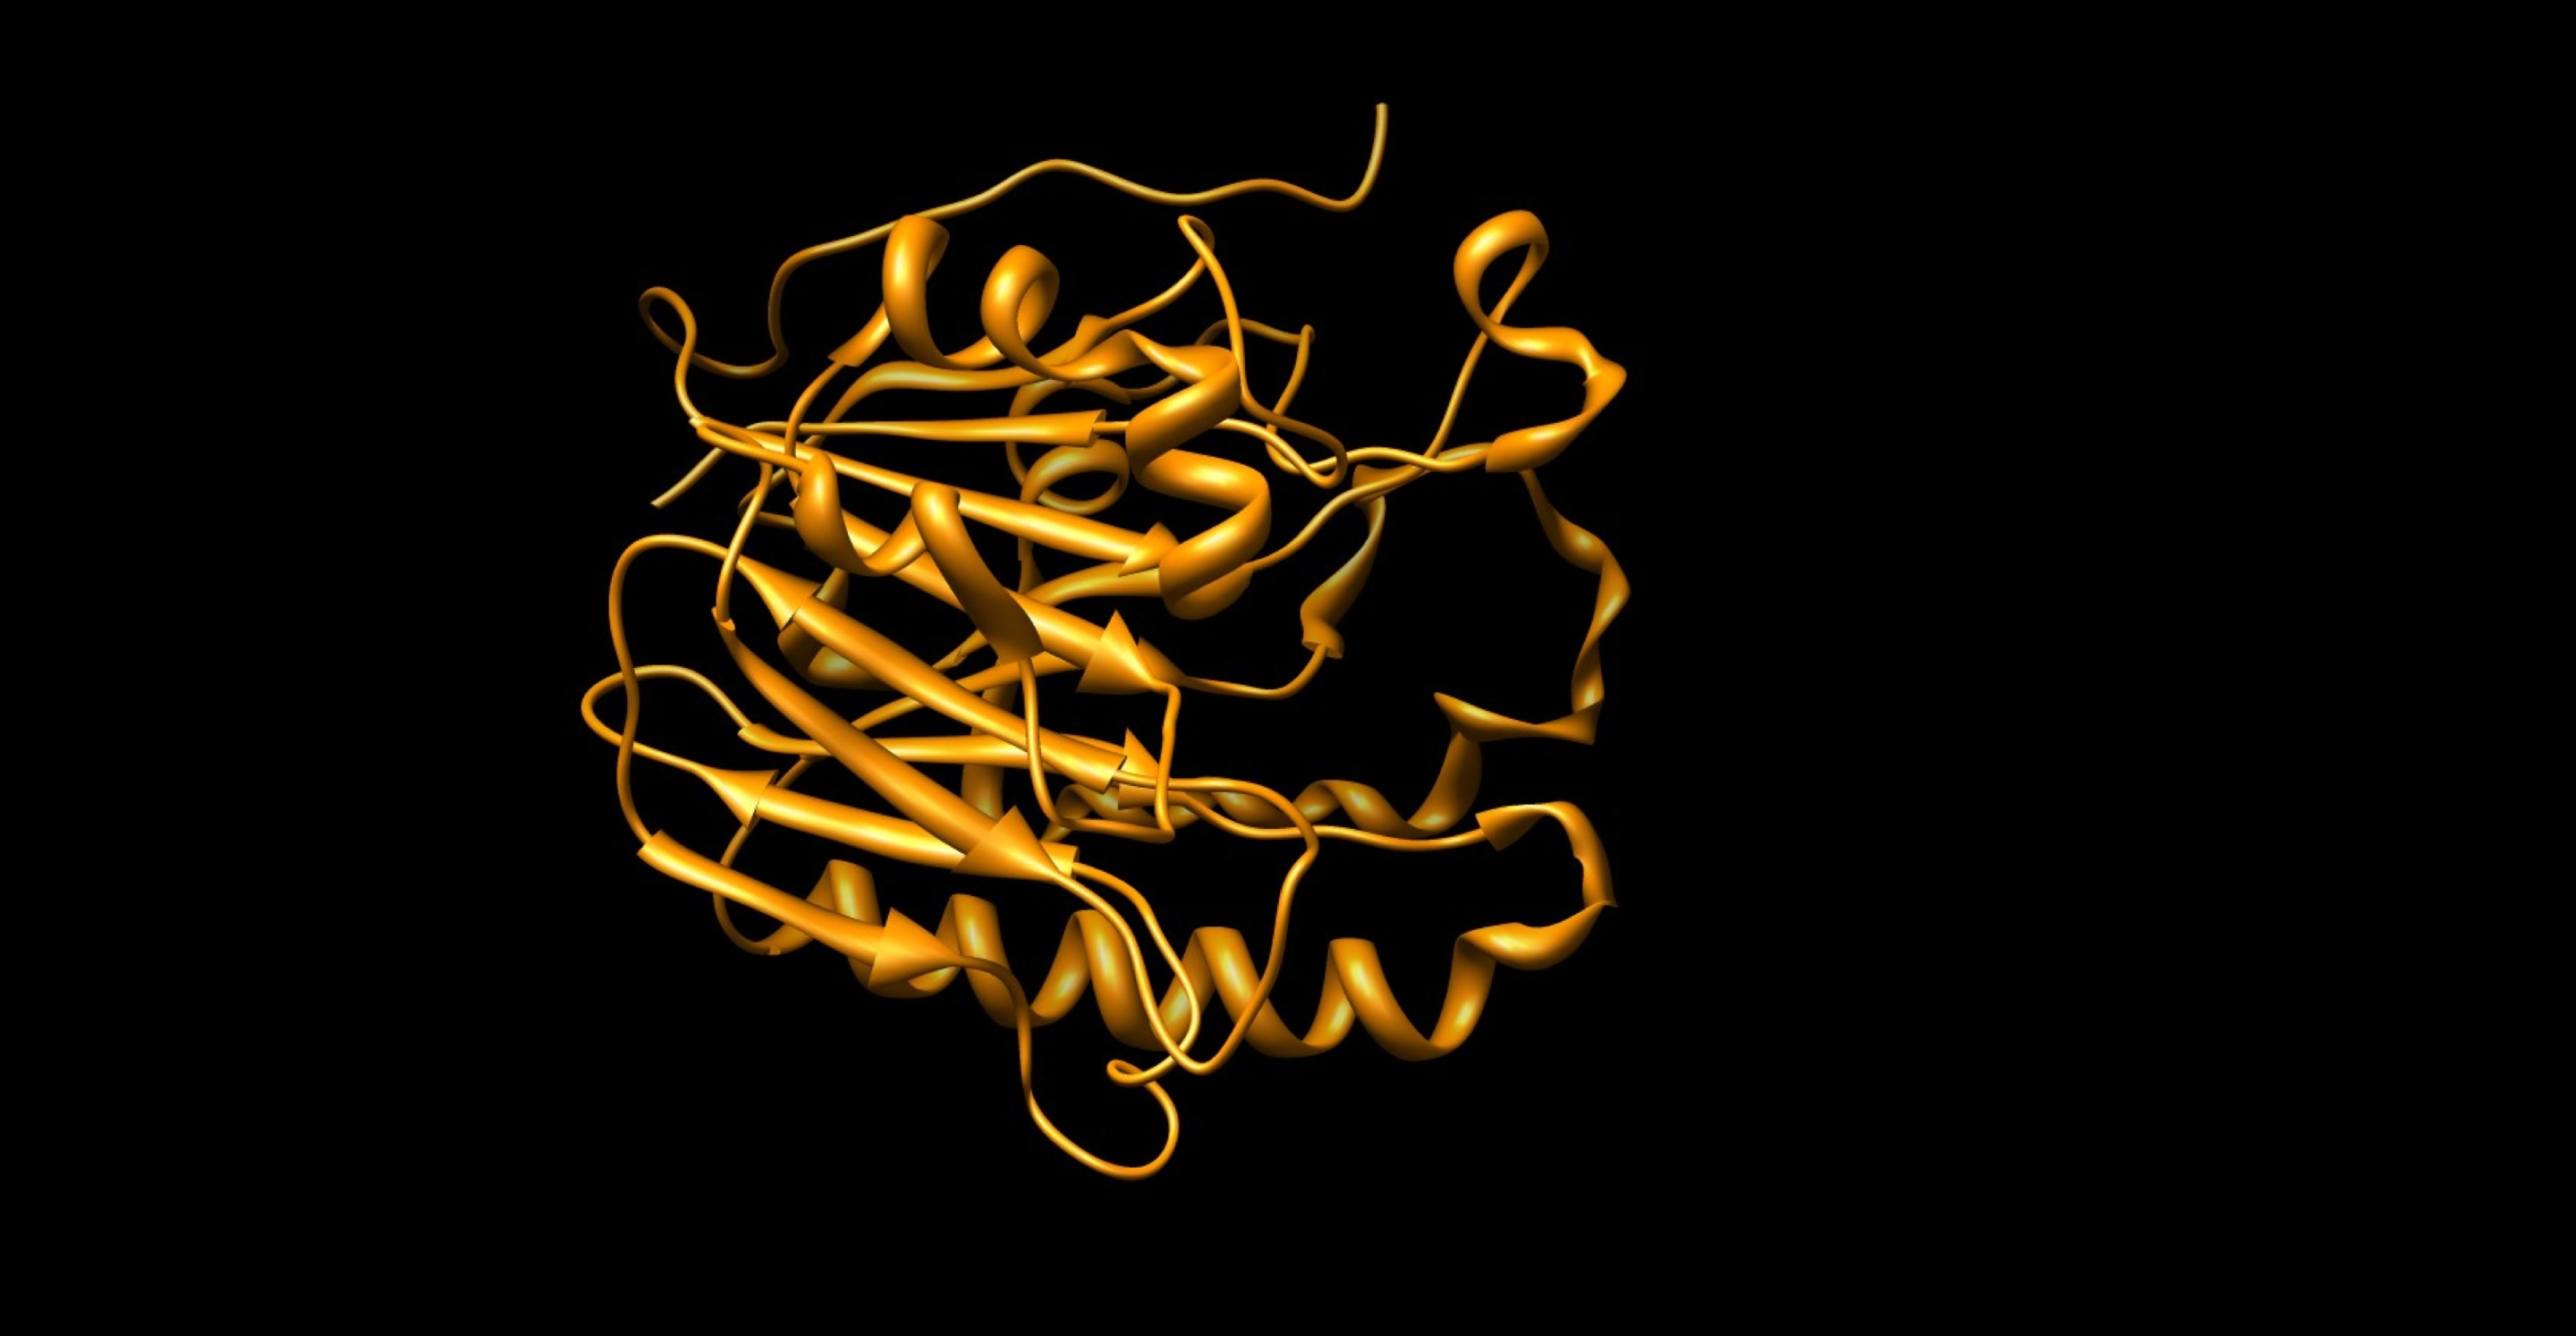 ApEndonuclease1